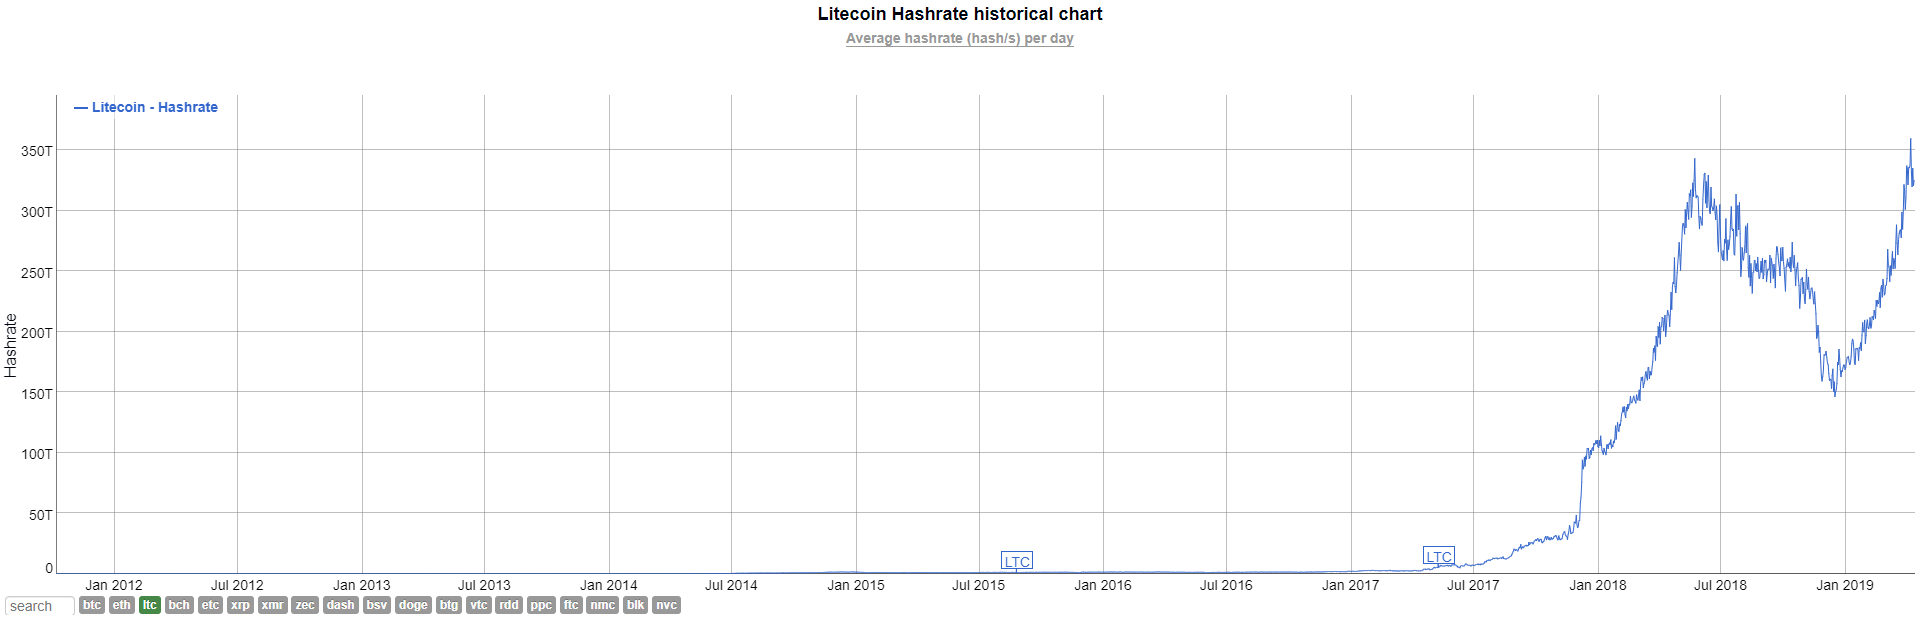 Litecoin Hash Rate